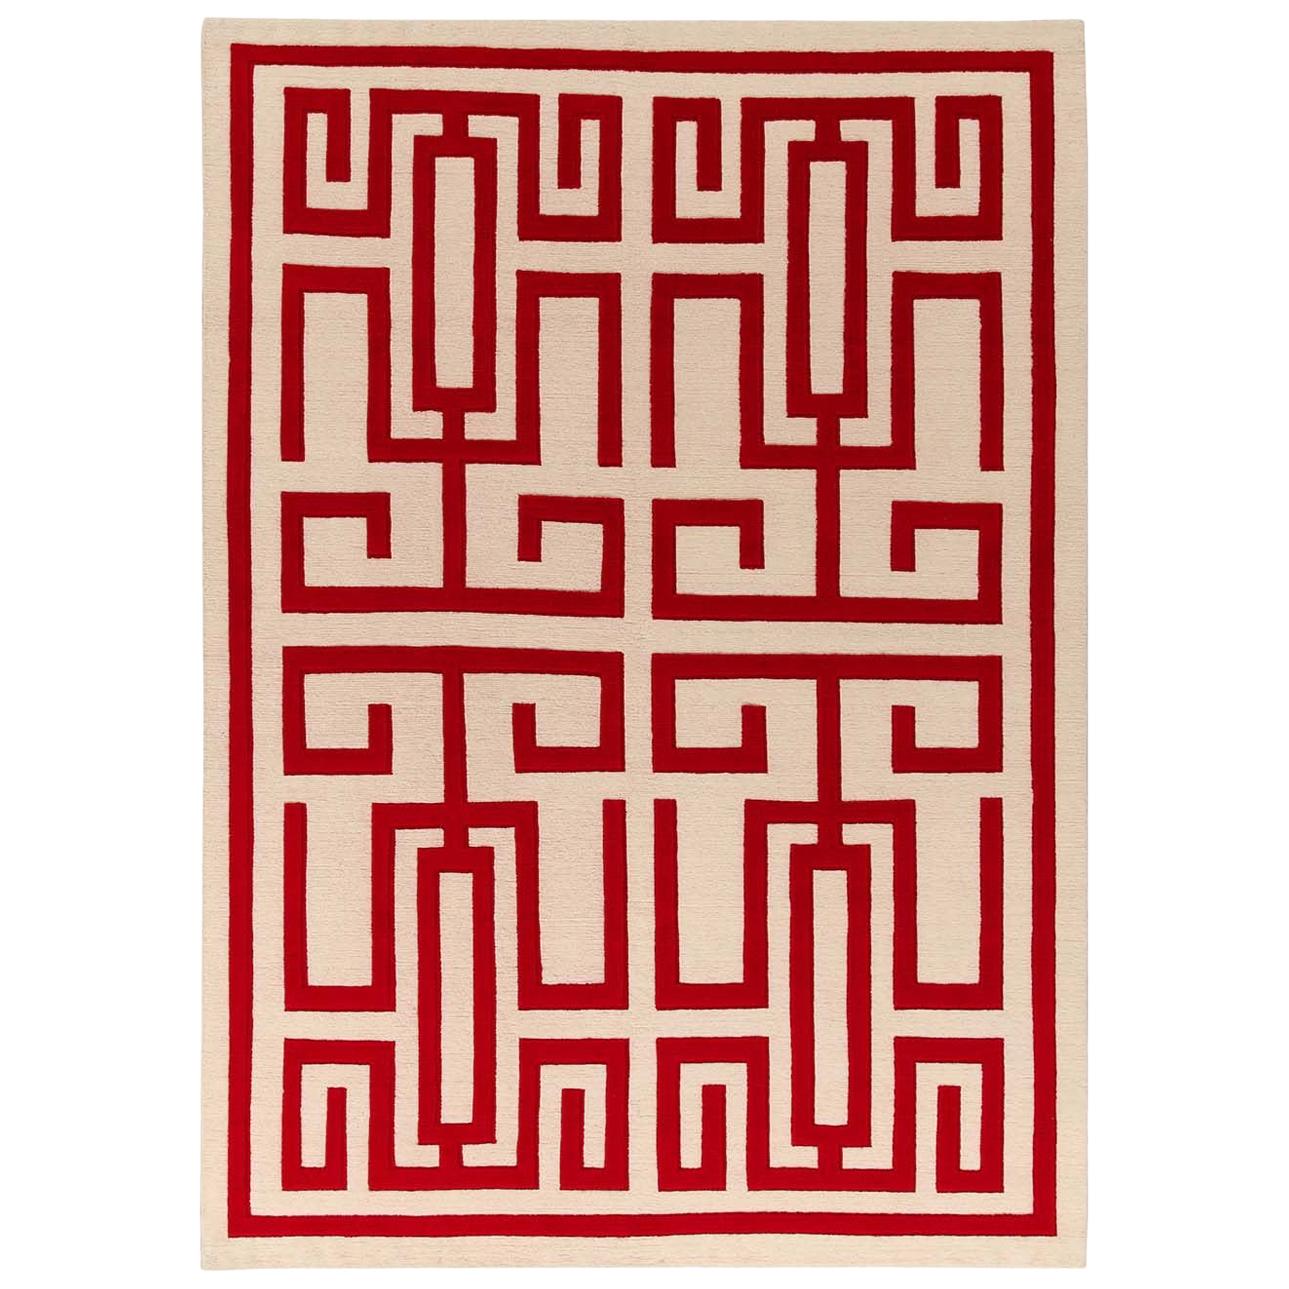 Roter Labirinto-Teppich von Gio Ponti